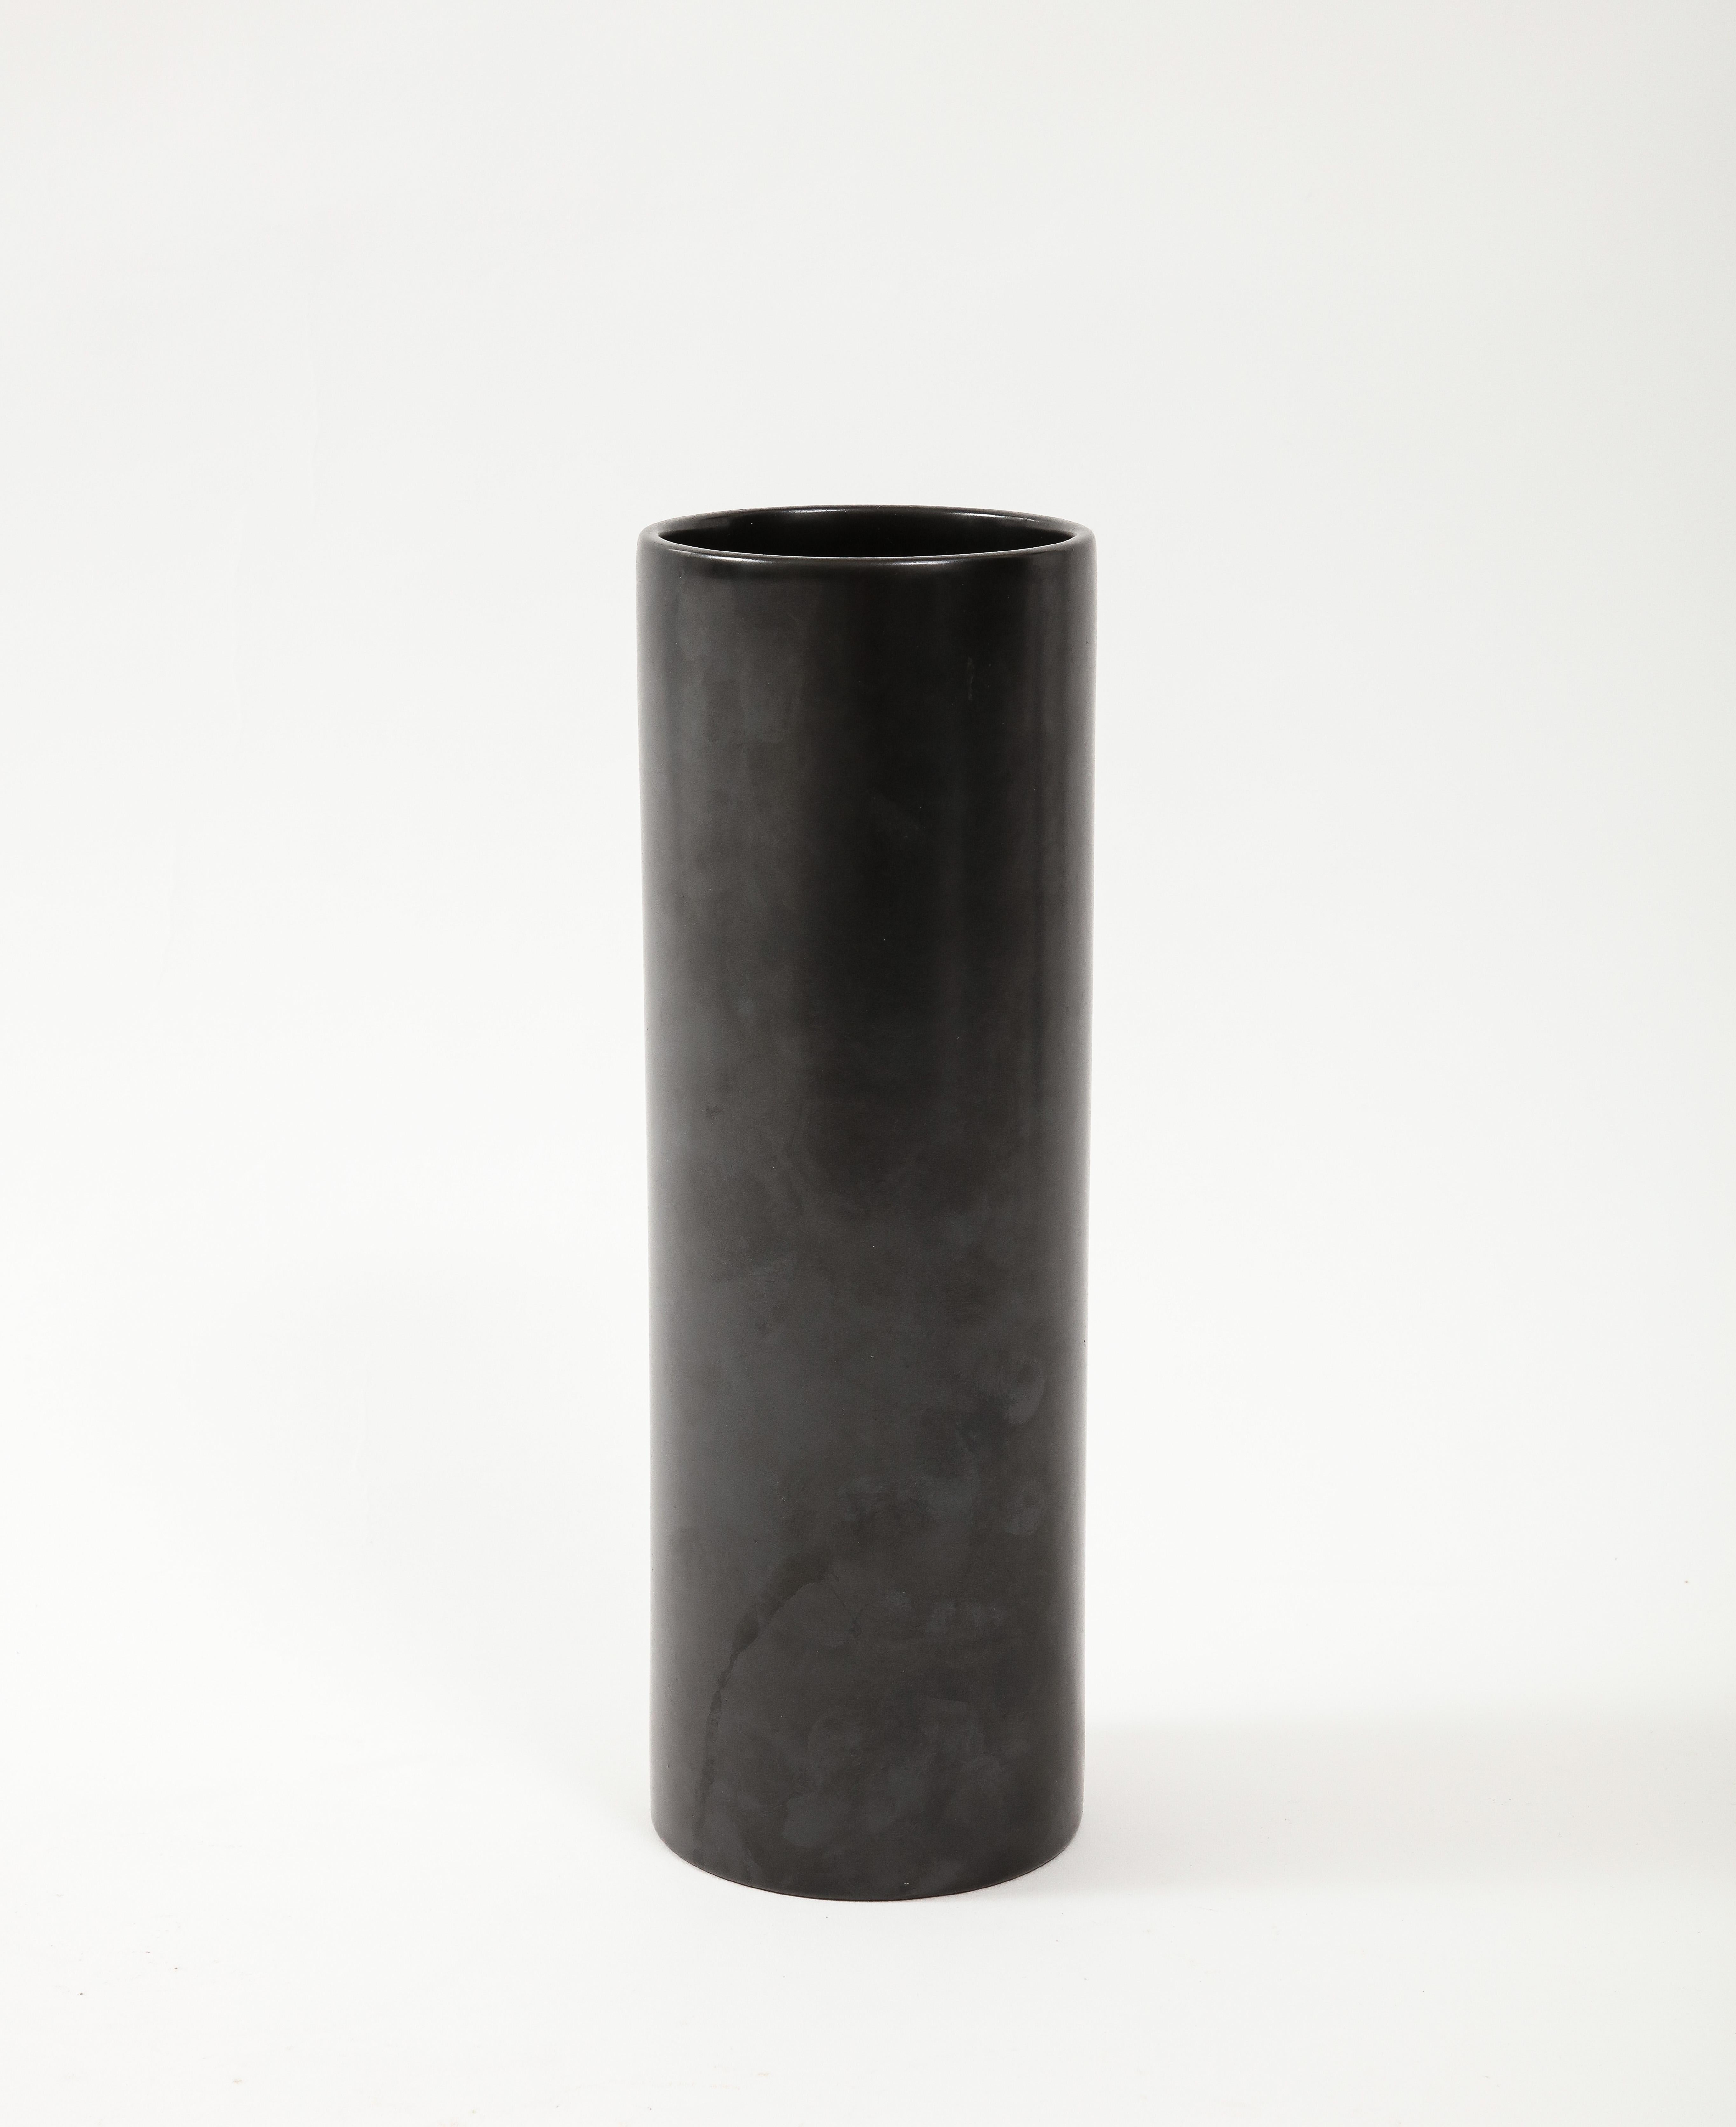 French Large Georges Jouve Style Black Matte Cylinder Vase, France, c. 1950's For Sale